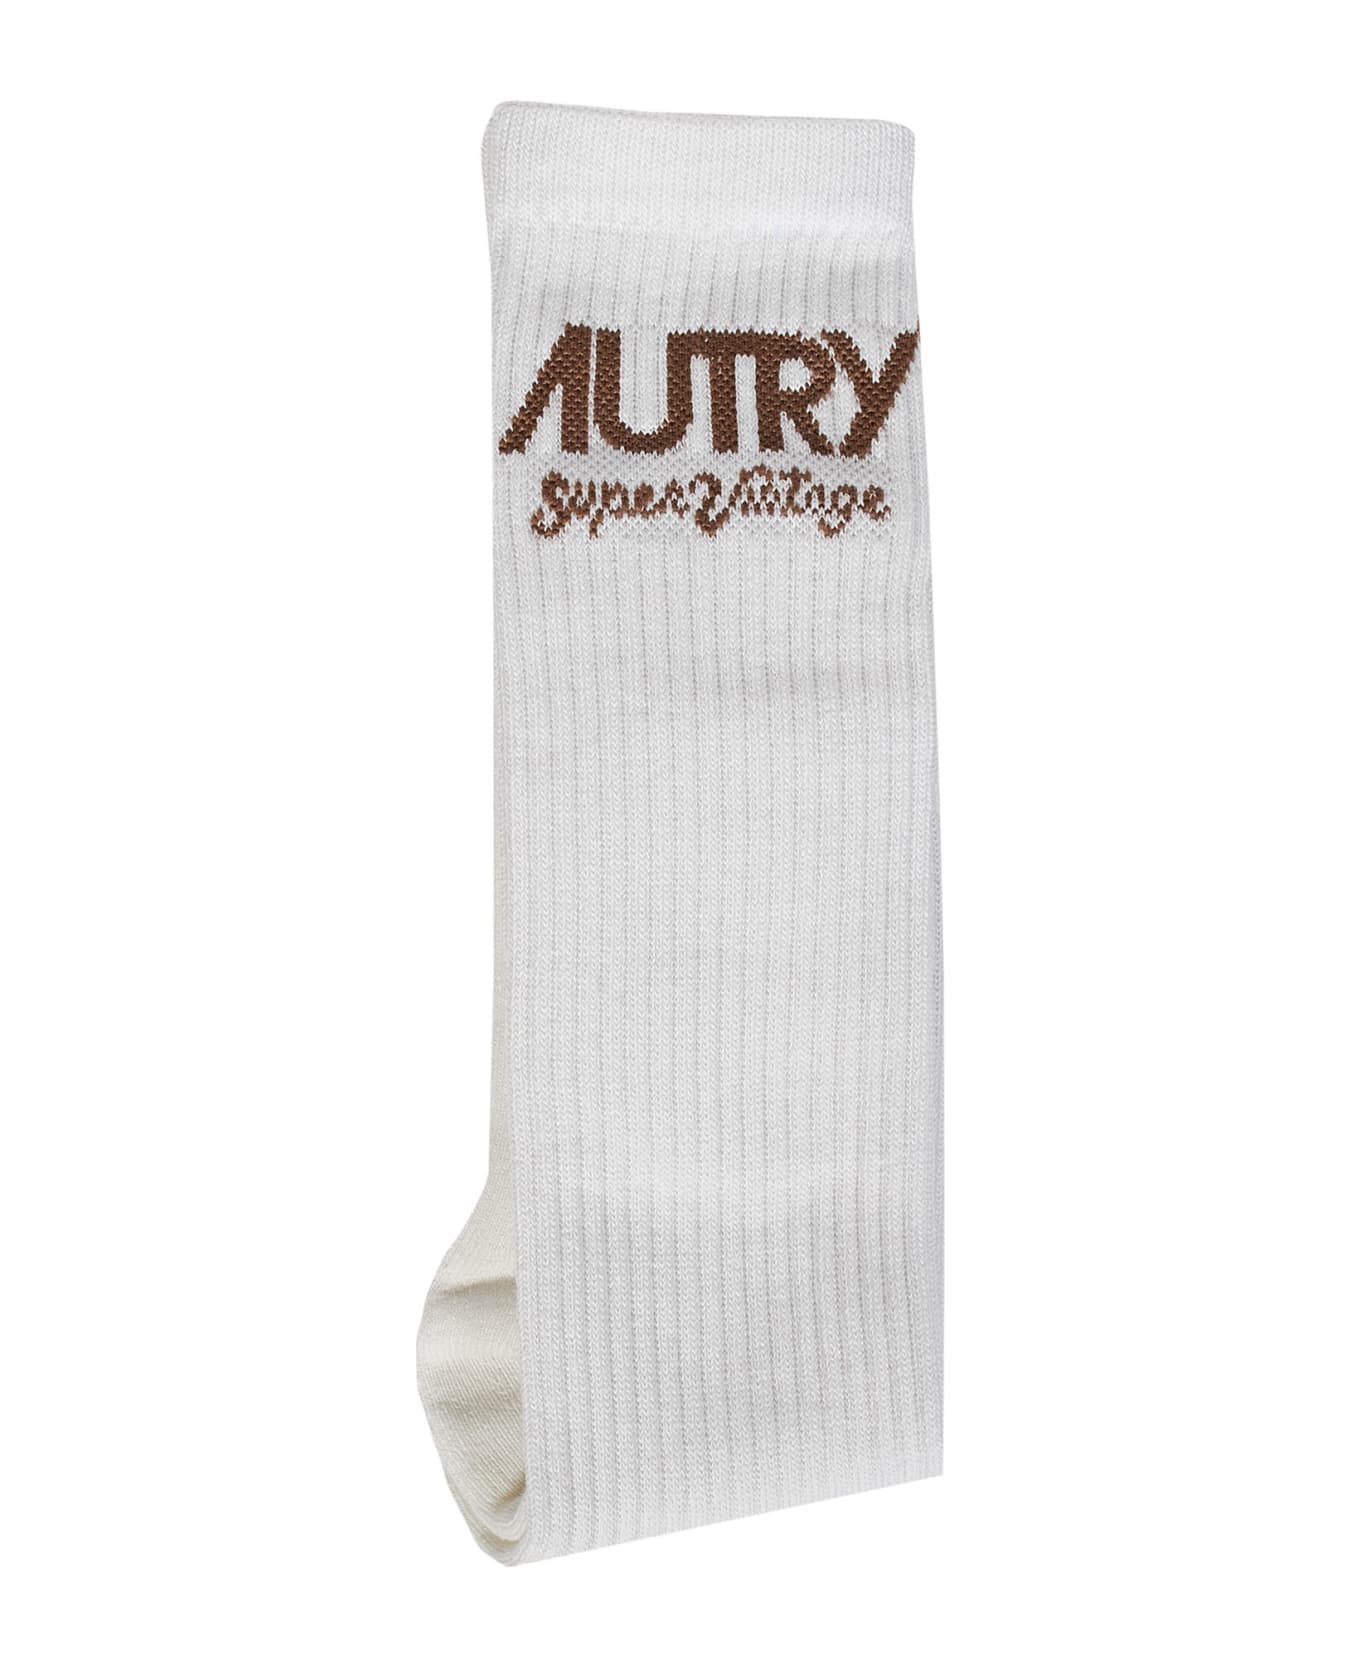 Autry Supervintage Socks - Grigio